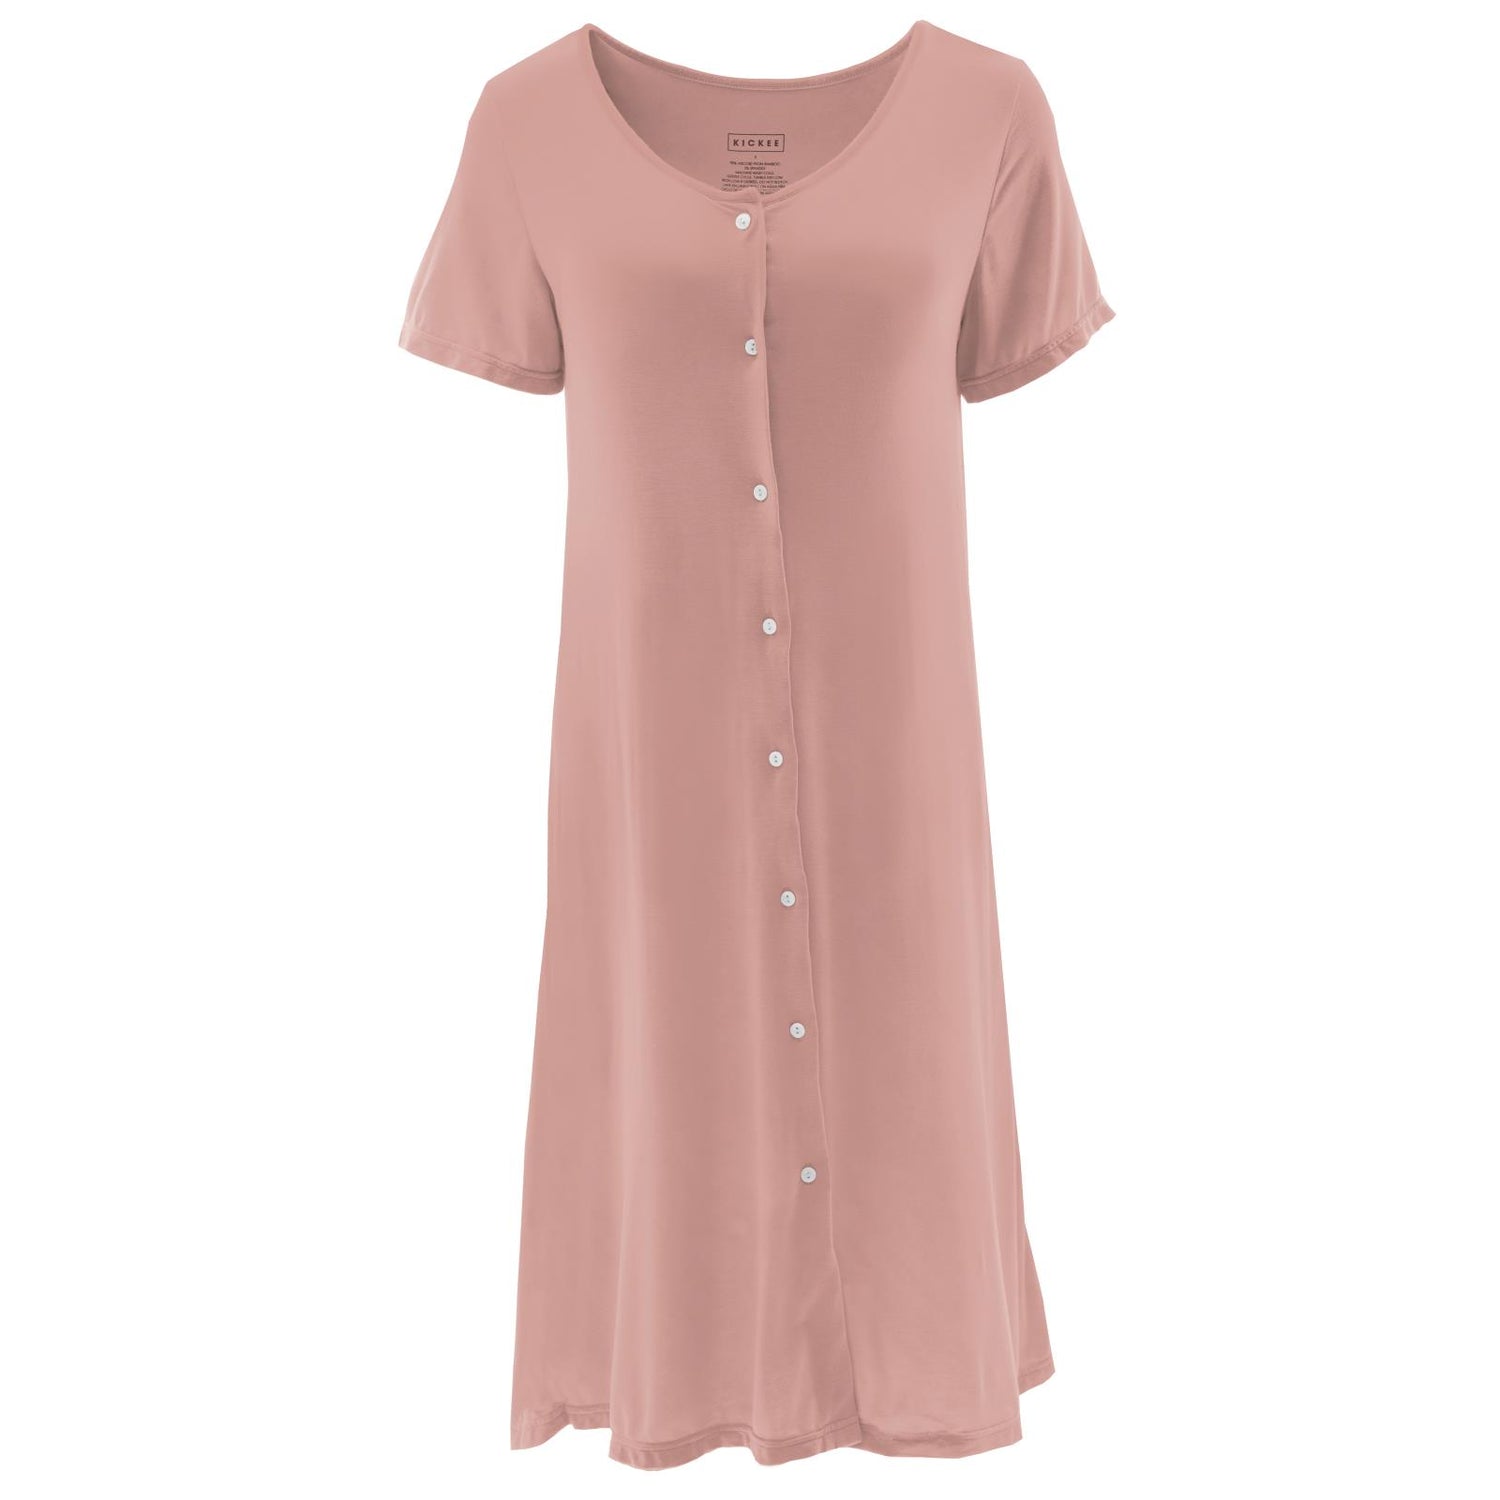 Women's Nursing Nightgown in Blush